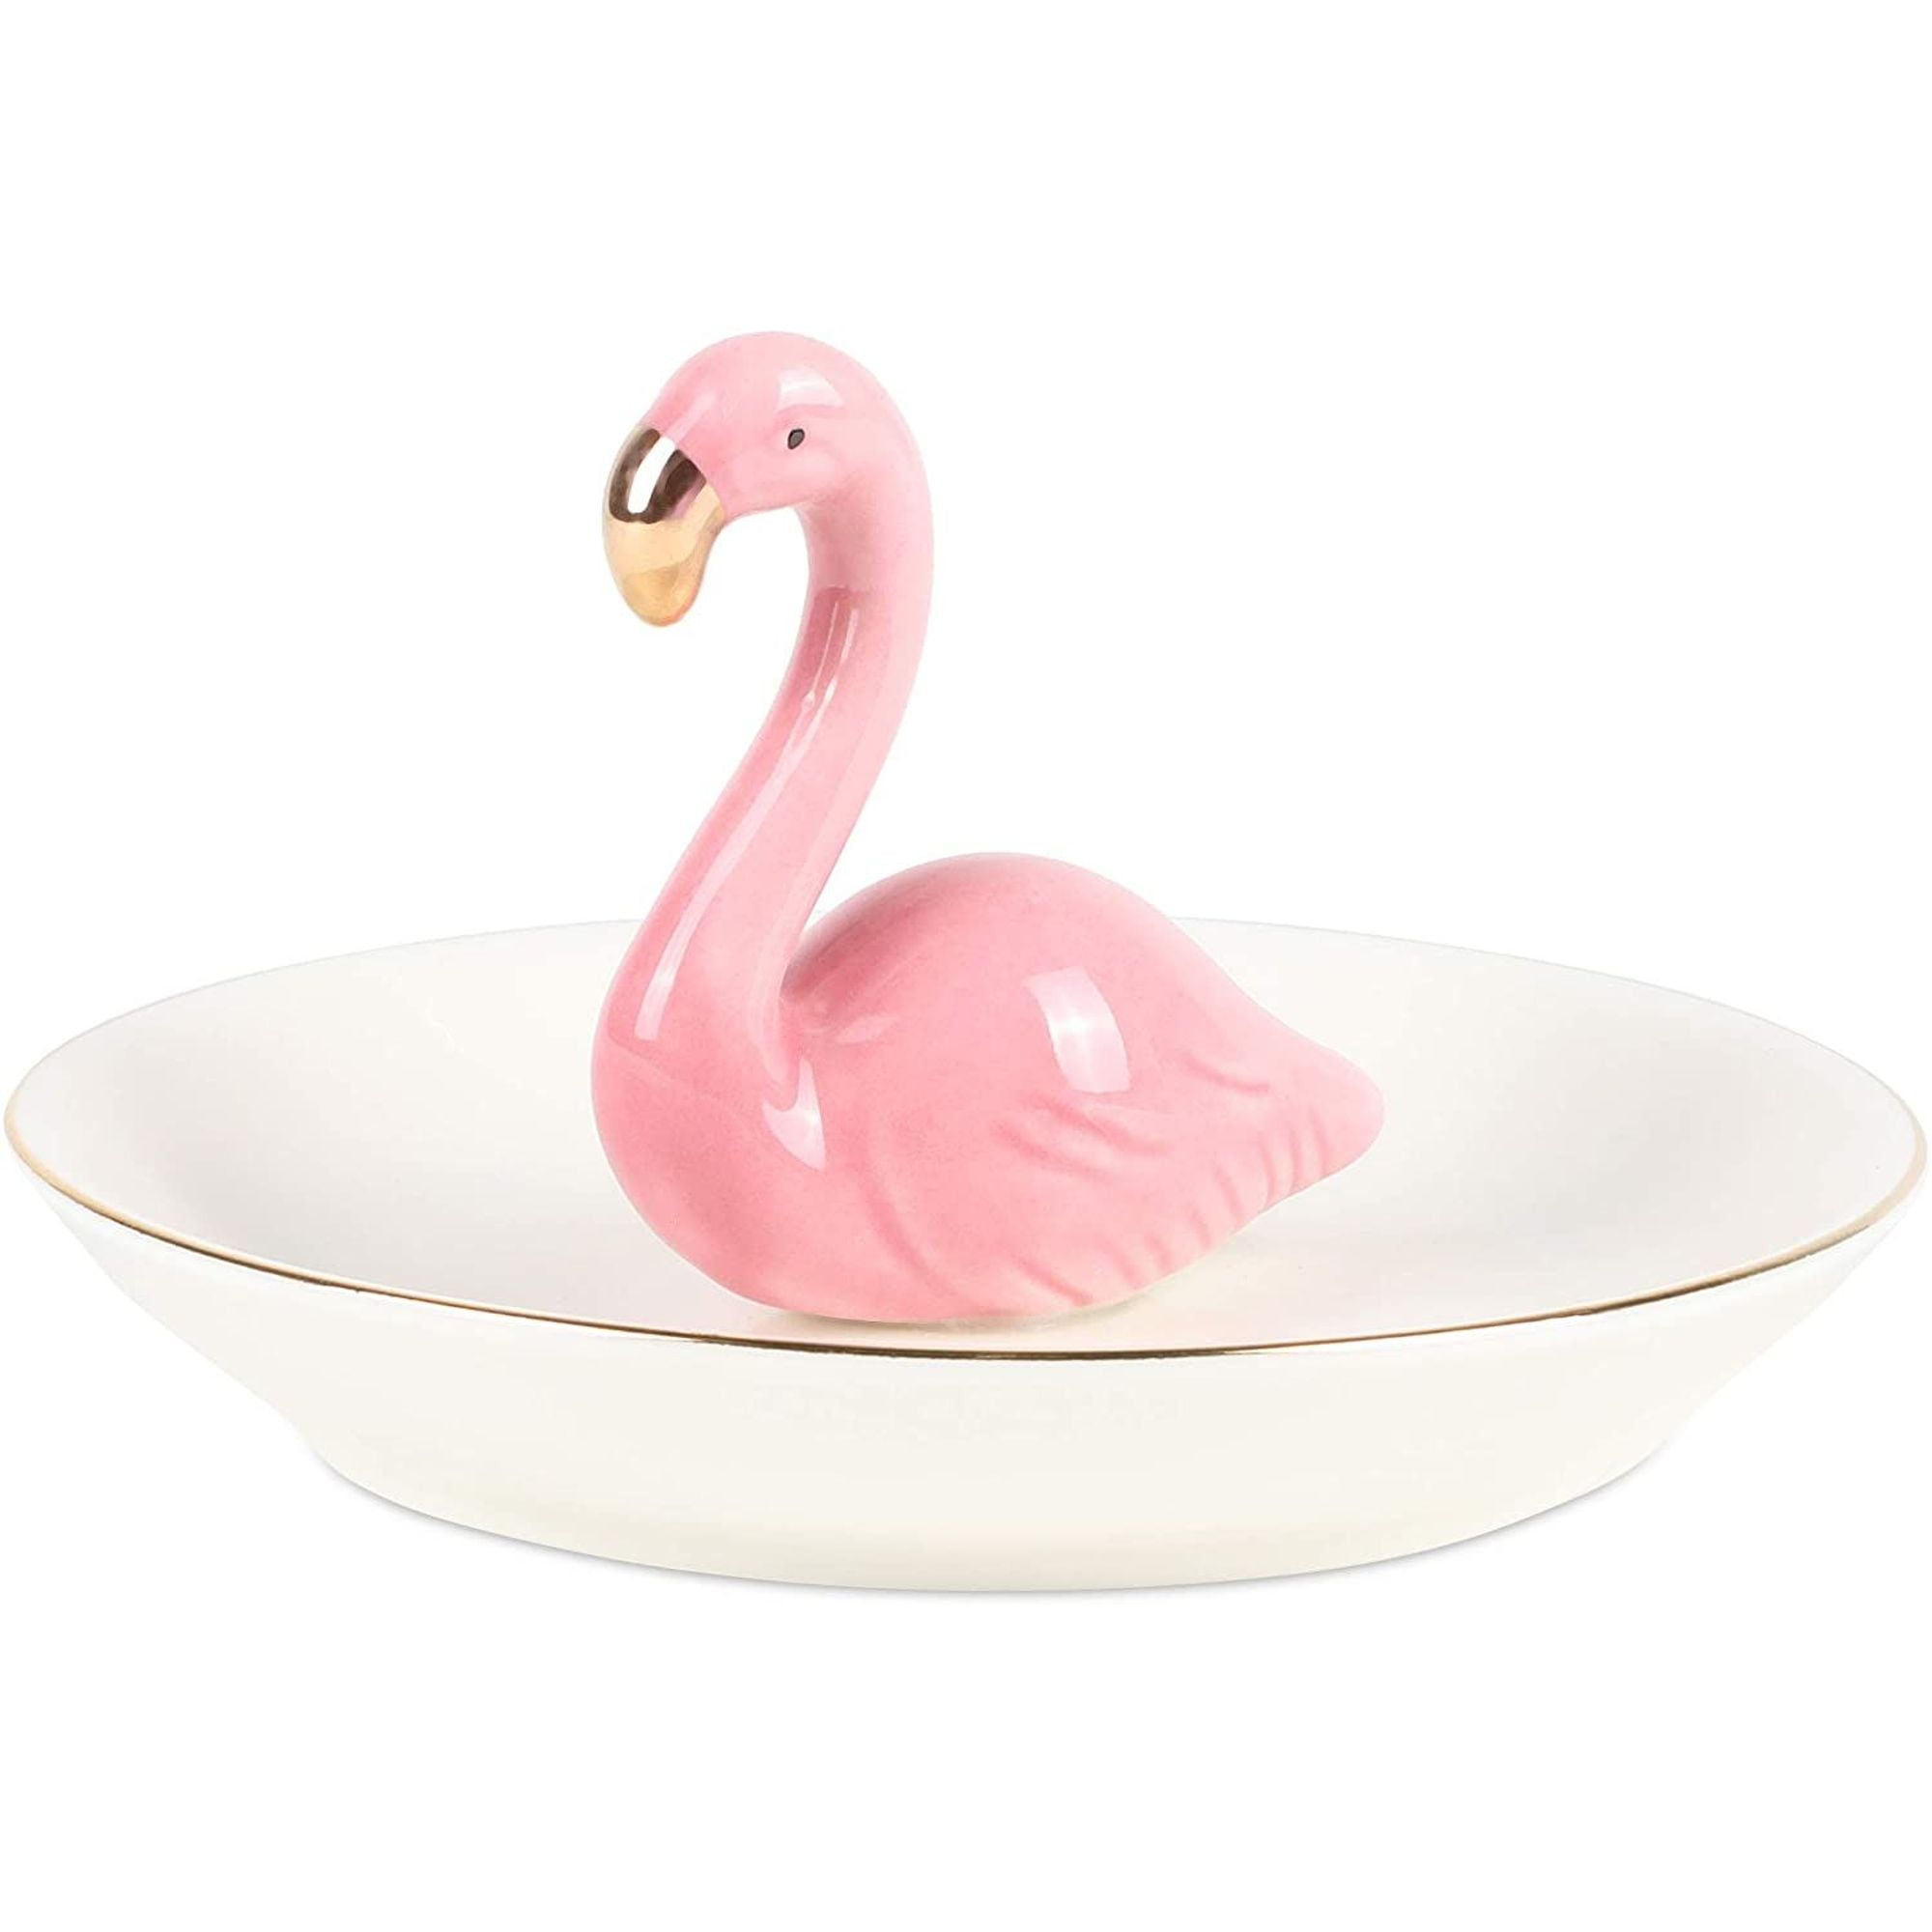 Details about   Ceramic Pink Flamingo Shaped Jewelry Trinket Holder Tray Dish Organizer 